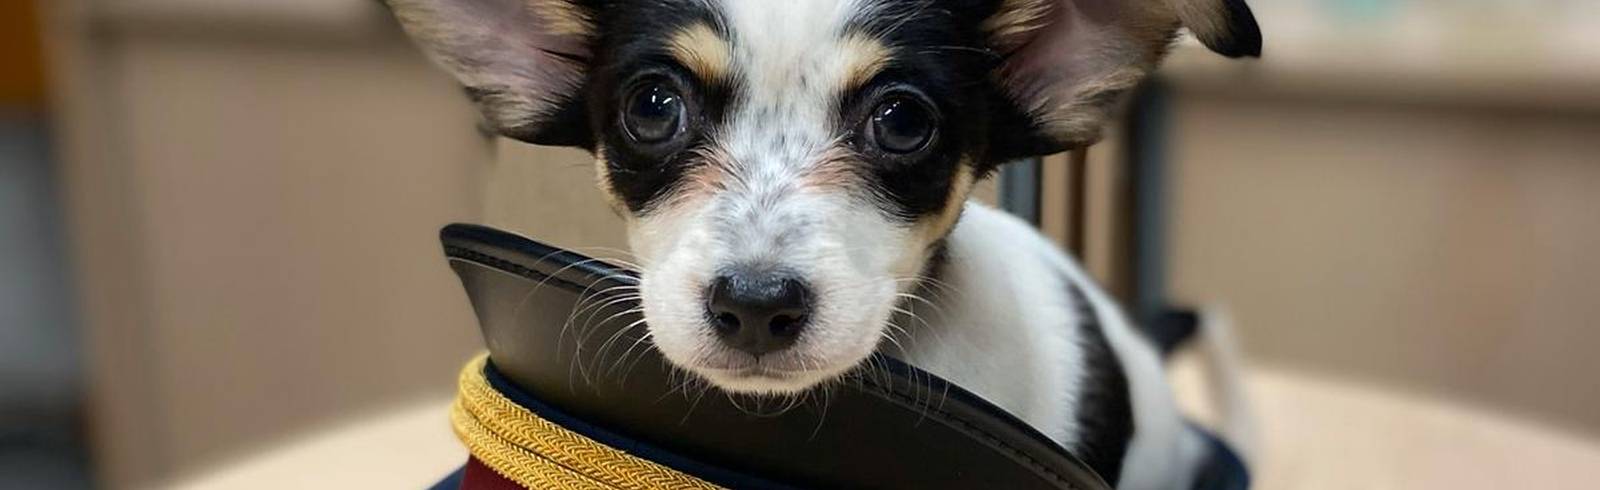 Chihuahua-Welpe in Park in Favoriten gefunden